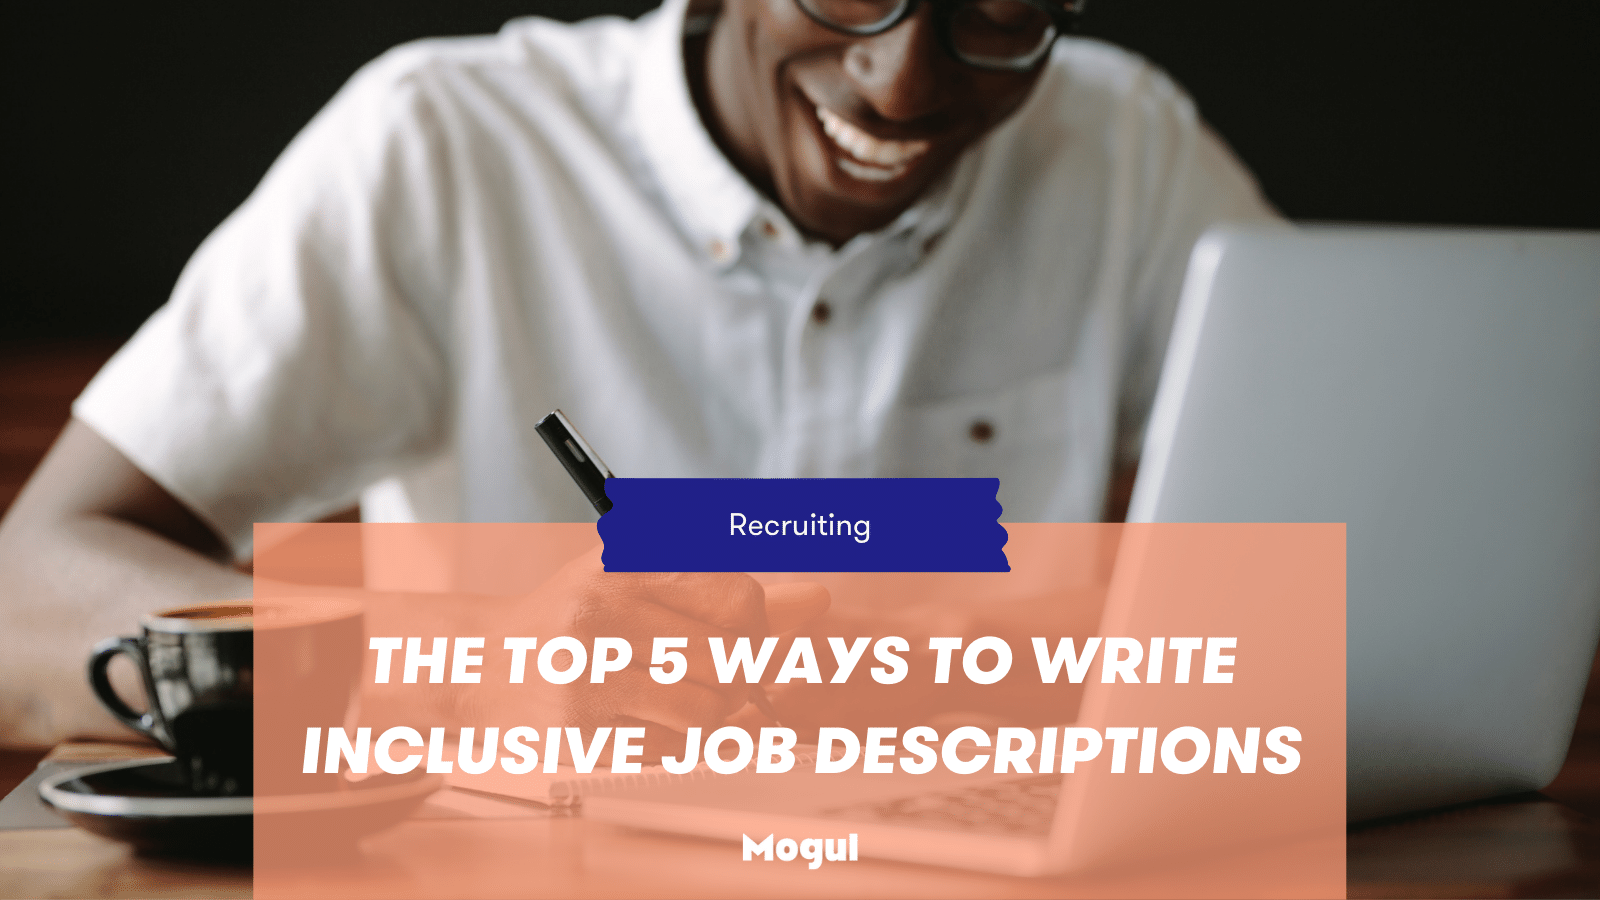 The top 5 ways to write inclusive job descriptions